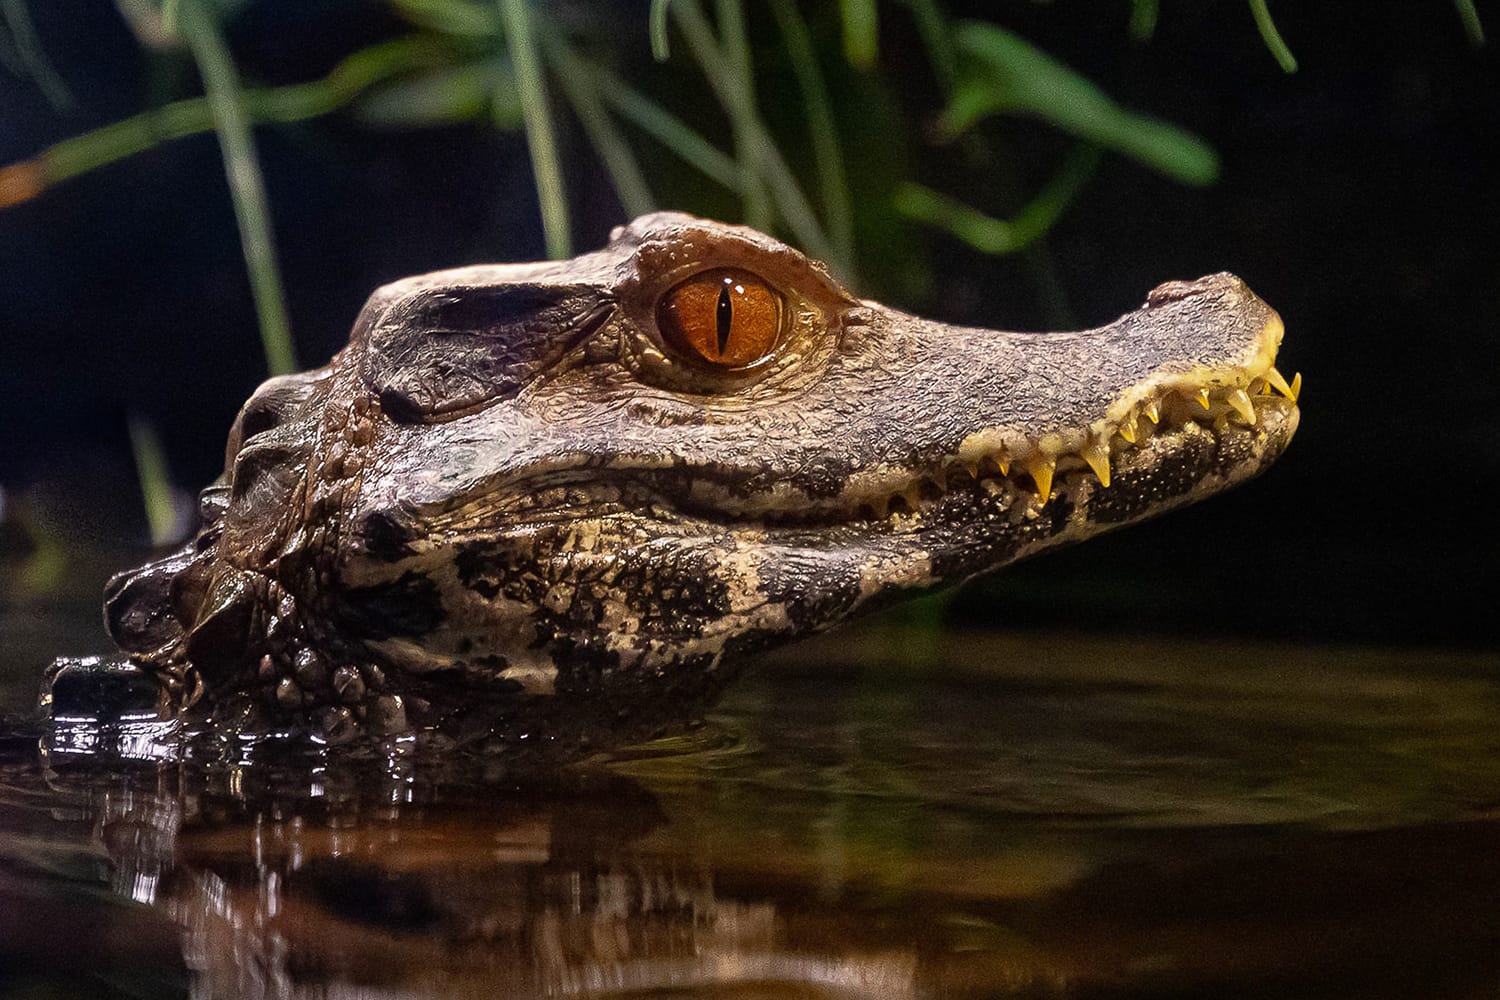 Caiman Crocodile at OdySea Aquarium, Arizona